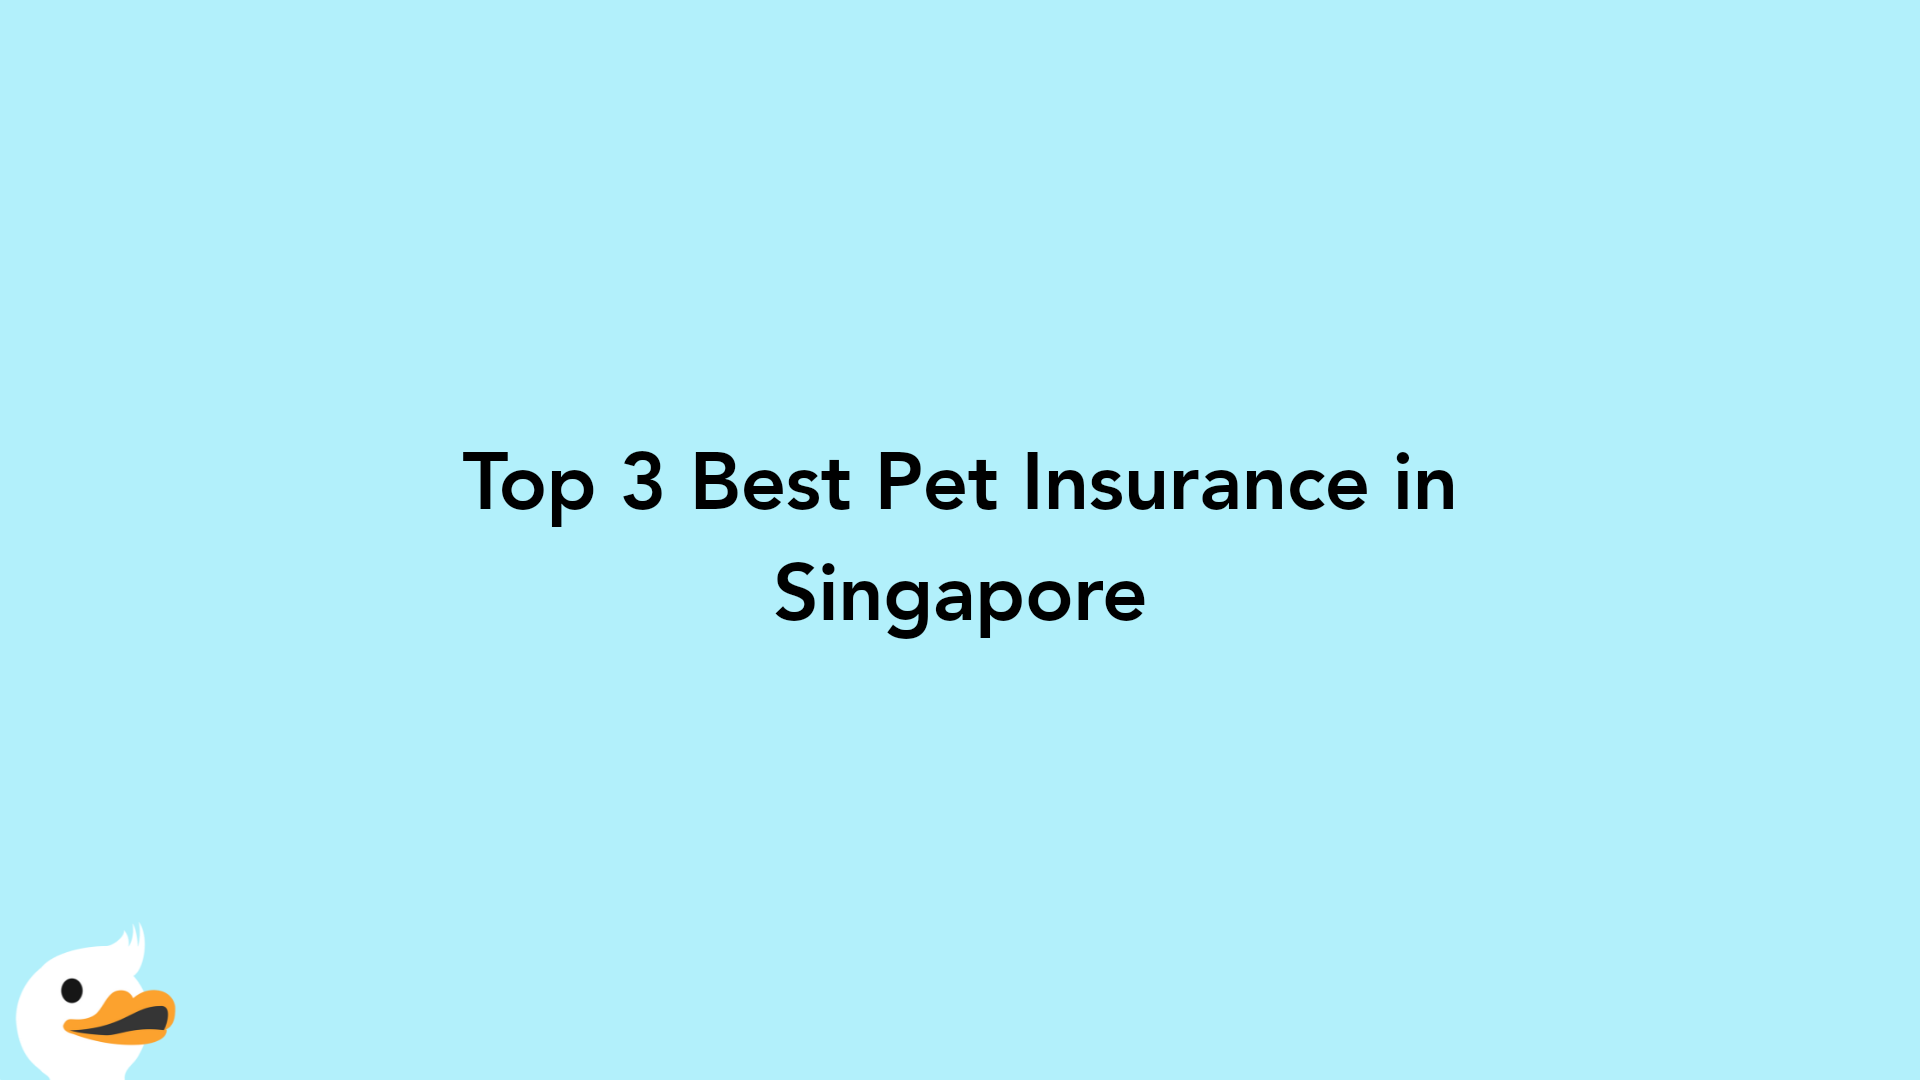 Top 3 Best Pet Insurance in Singapore